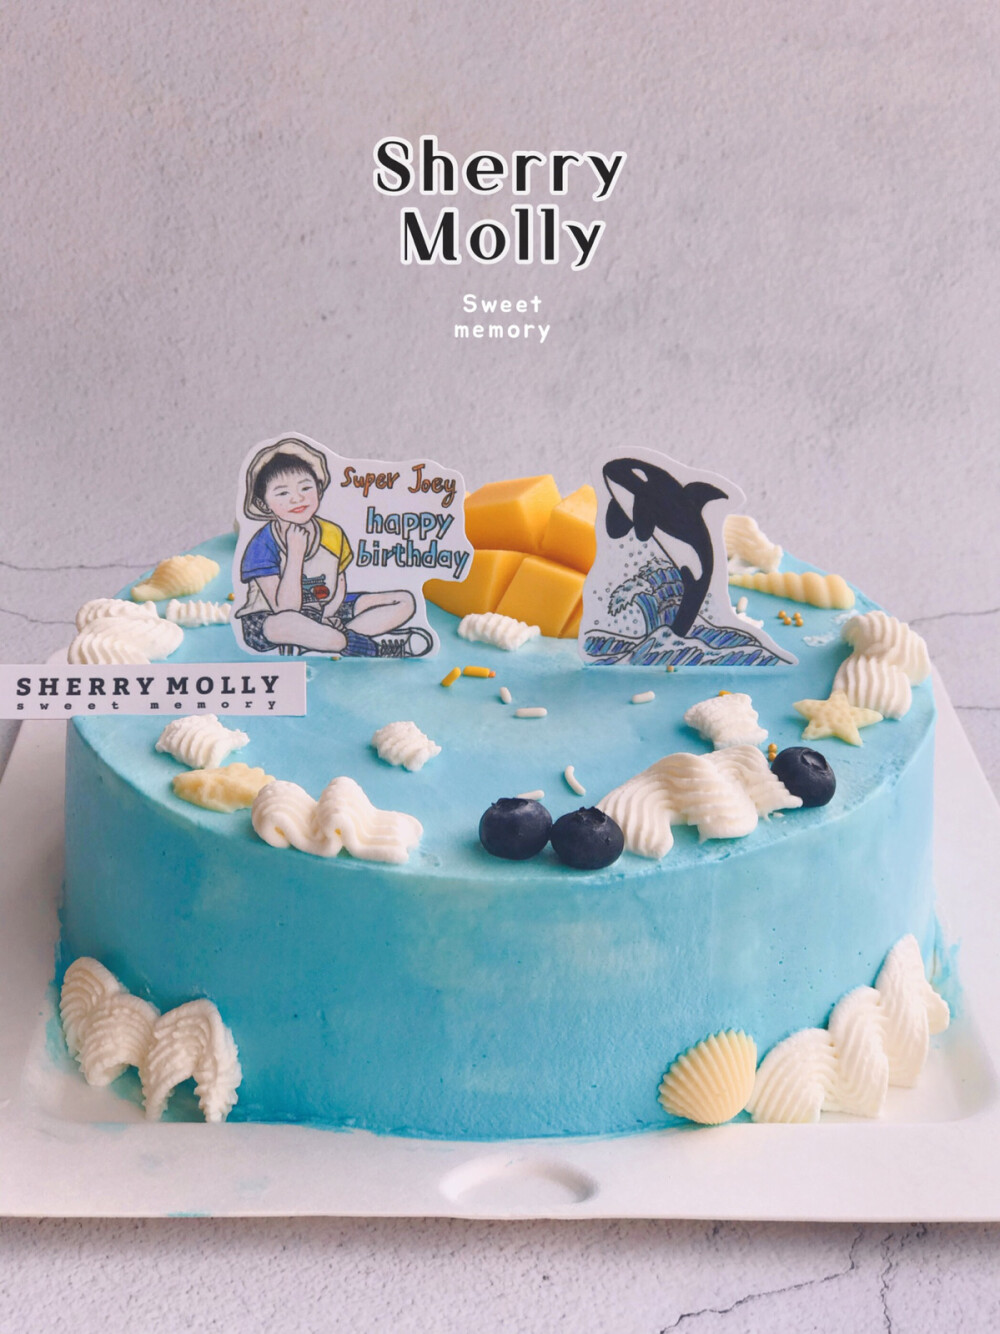 #SHERRY Molly家の下午茶#—『巧克力cake』喜欢虎鲸的小朋友的生日cake～ 海浪与海 虎鲸和他